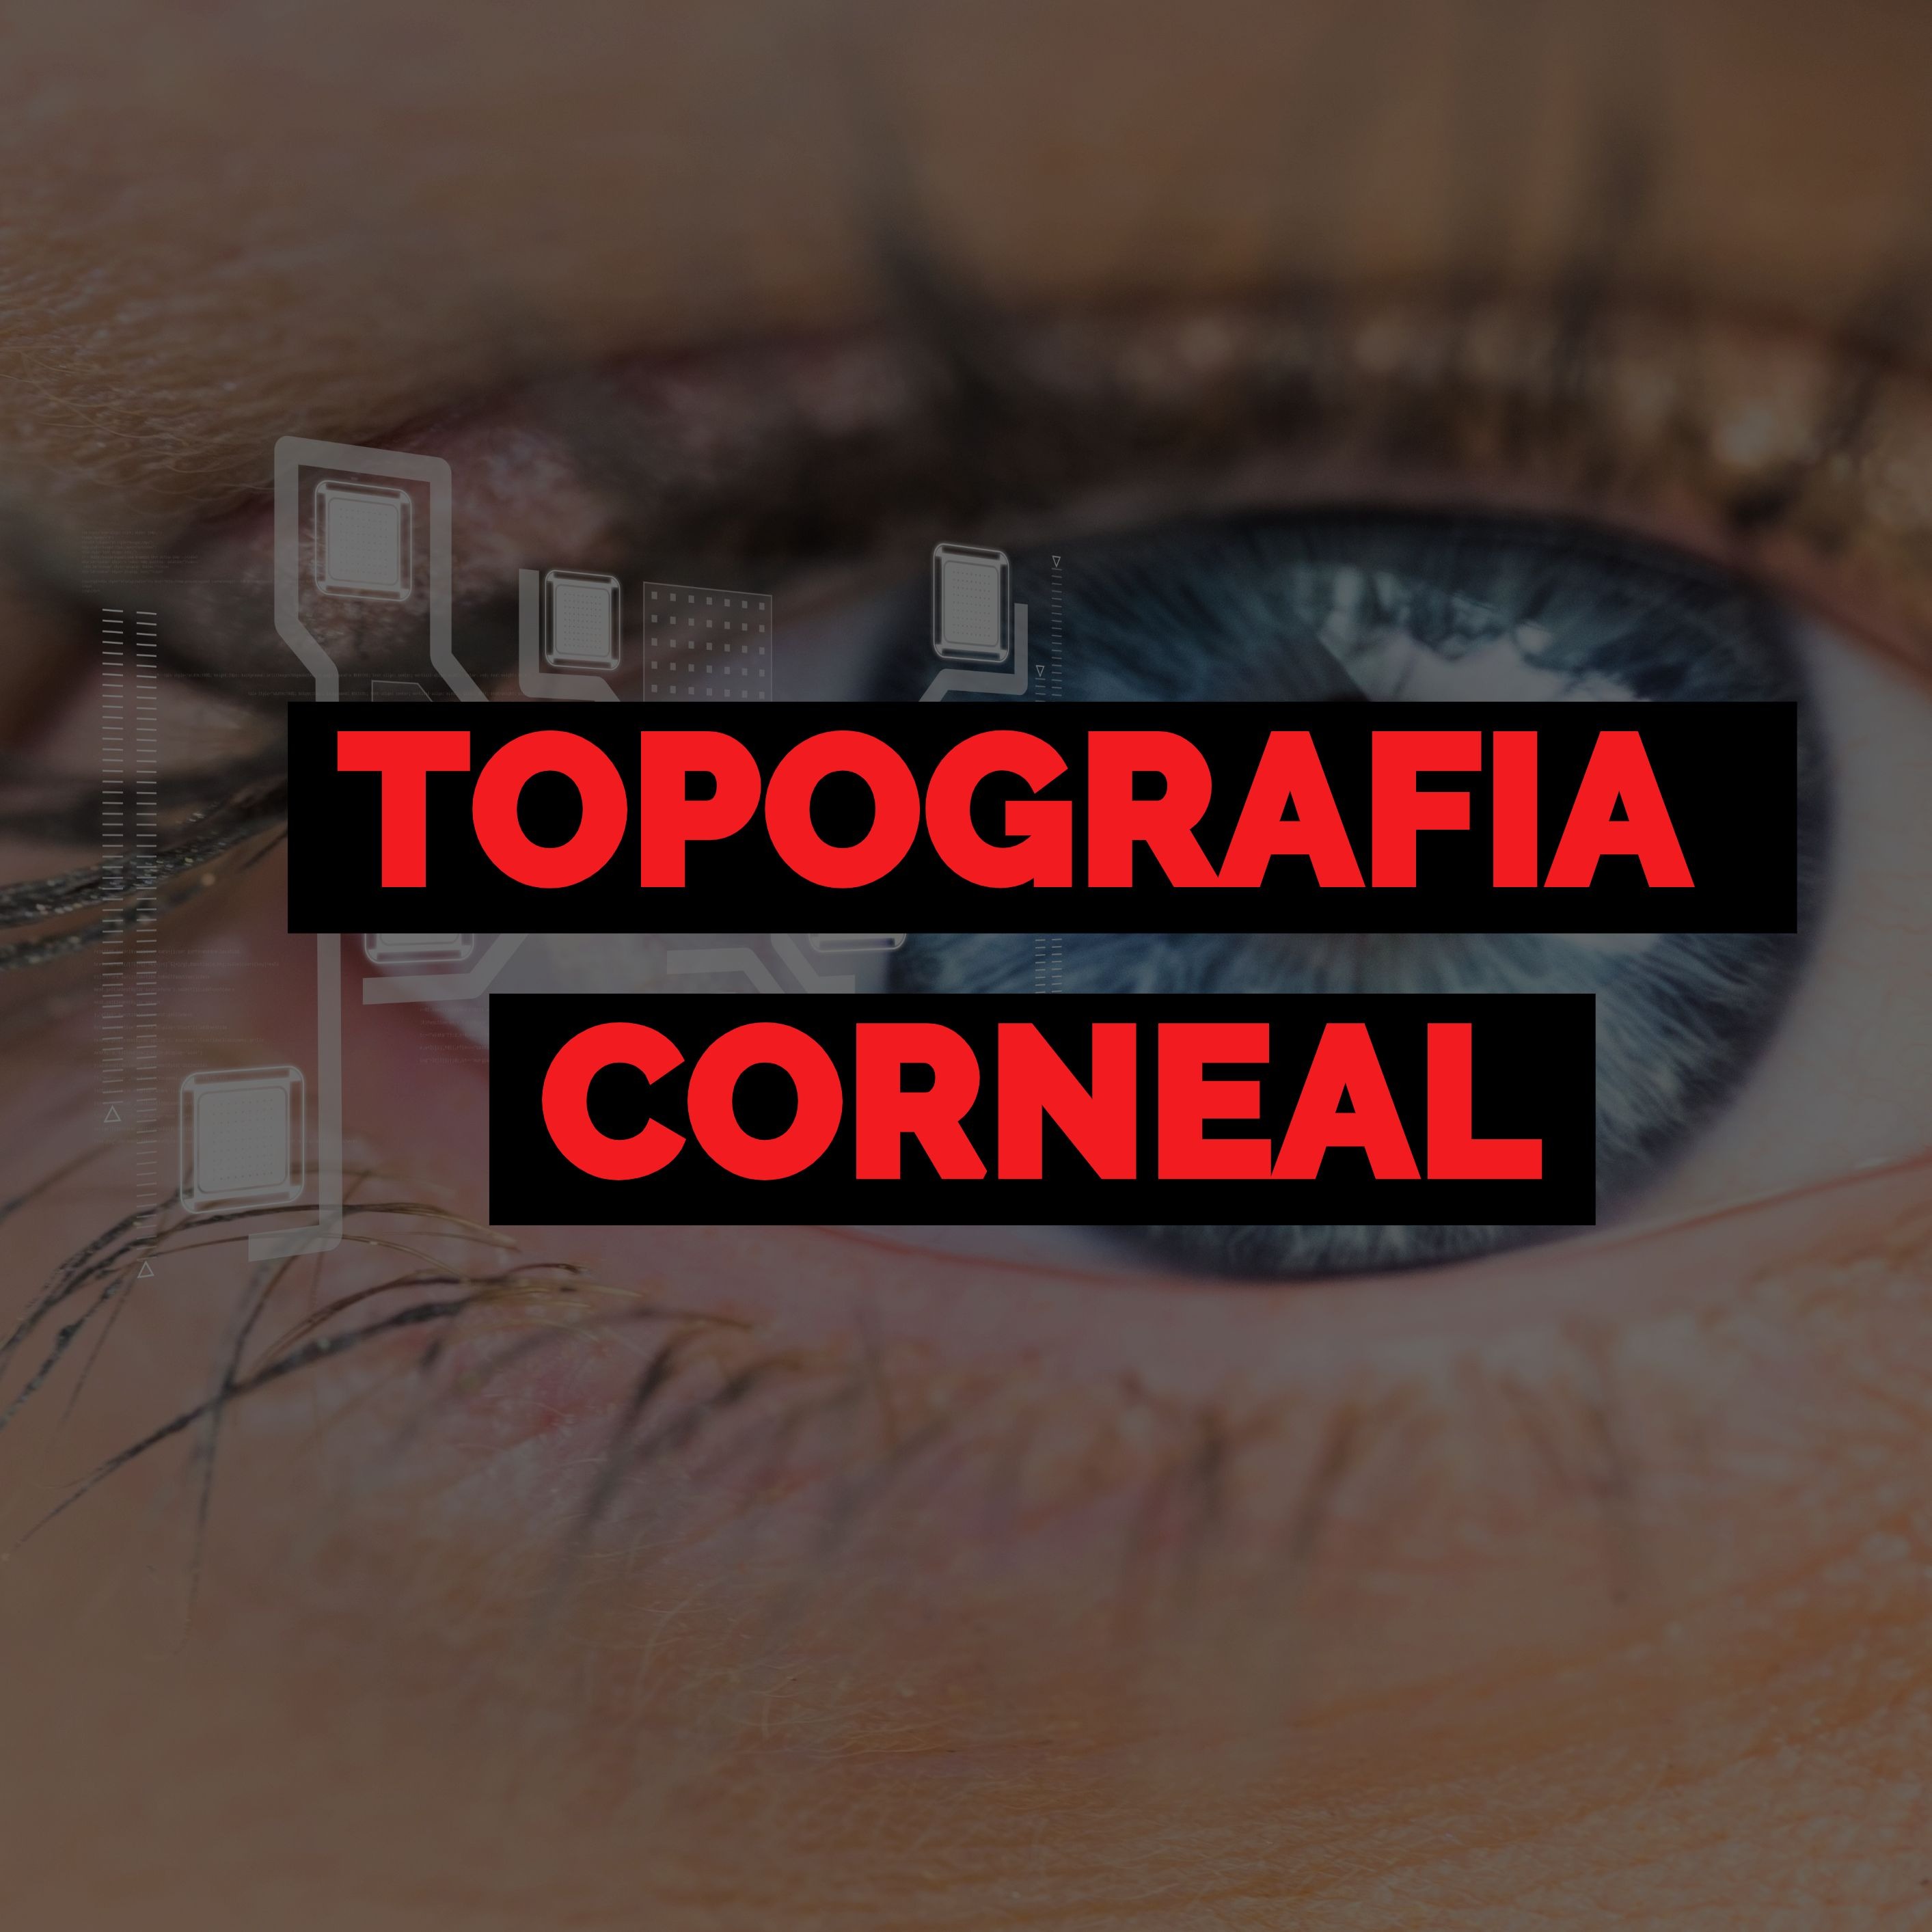 Topografia corneal